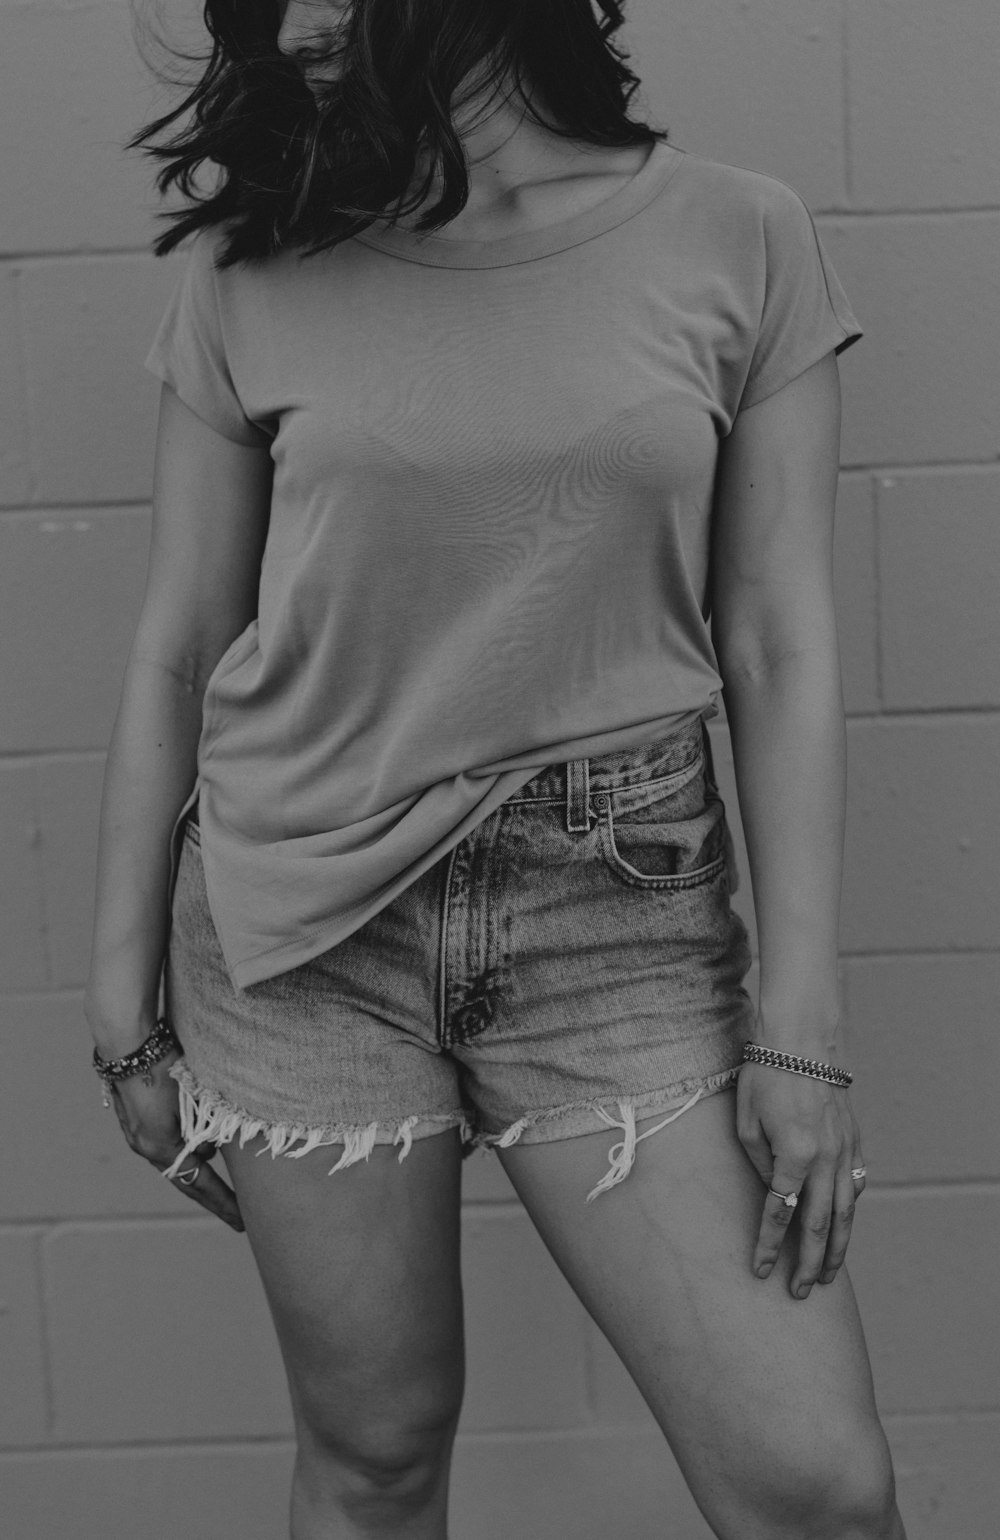 Tシャツとデニムのショートパンツを着た女性のグレースケール写真